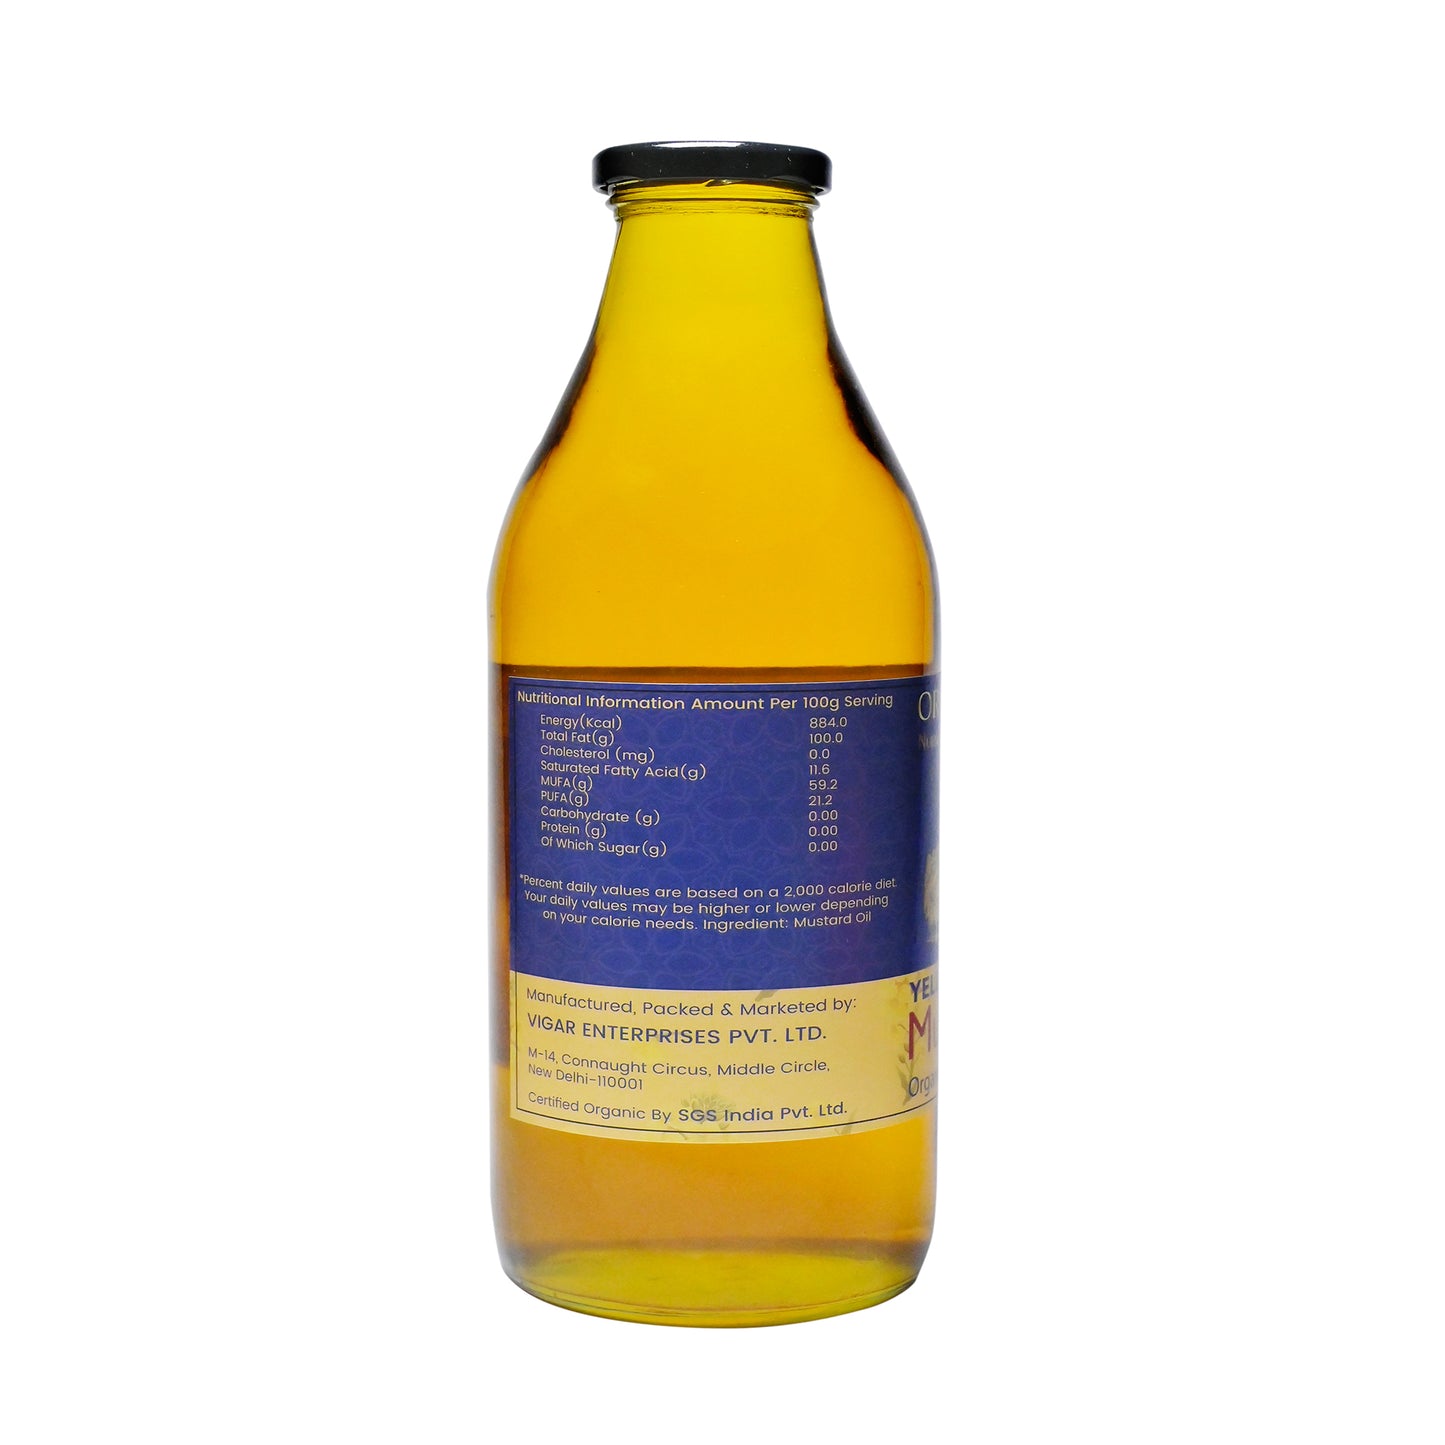 Organic Yellow Mustard Oil (1L) | Cold-Pressed, Unrefined, Extra Virgin | 100% Pure & Natural